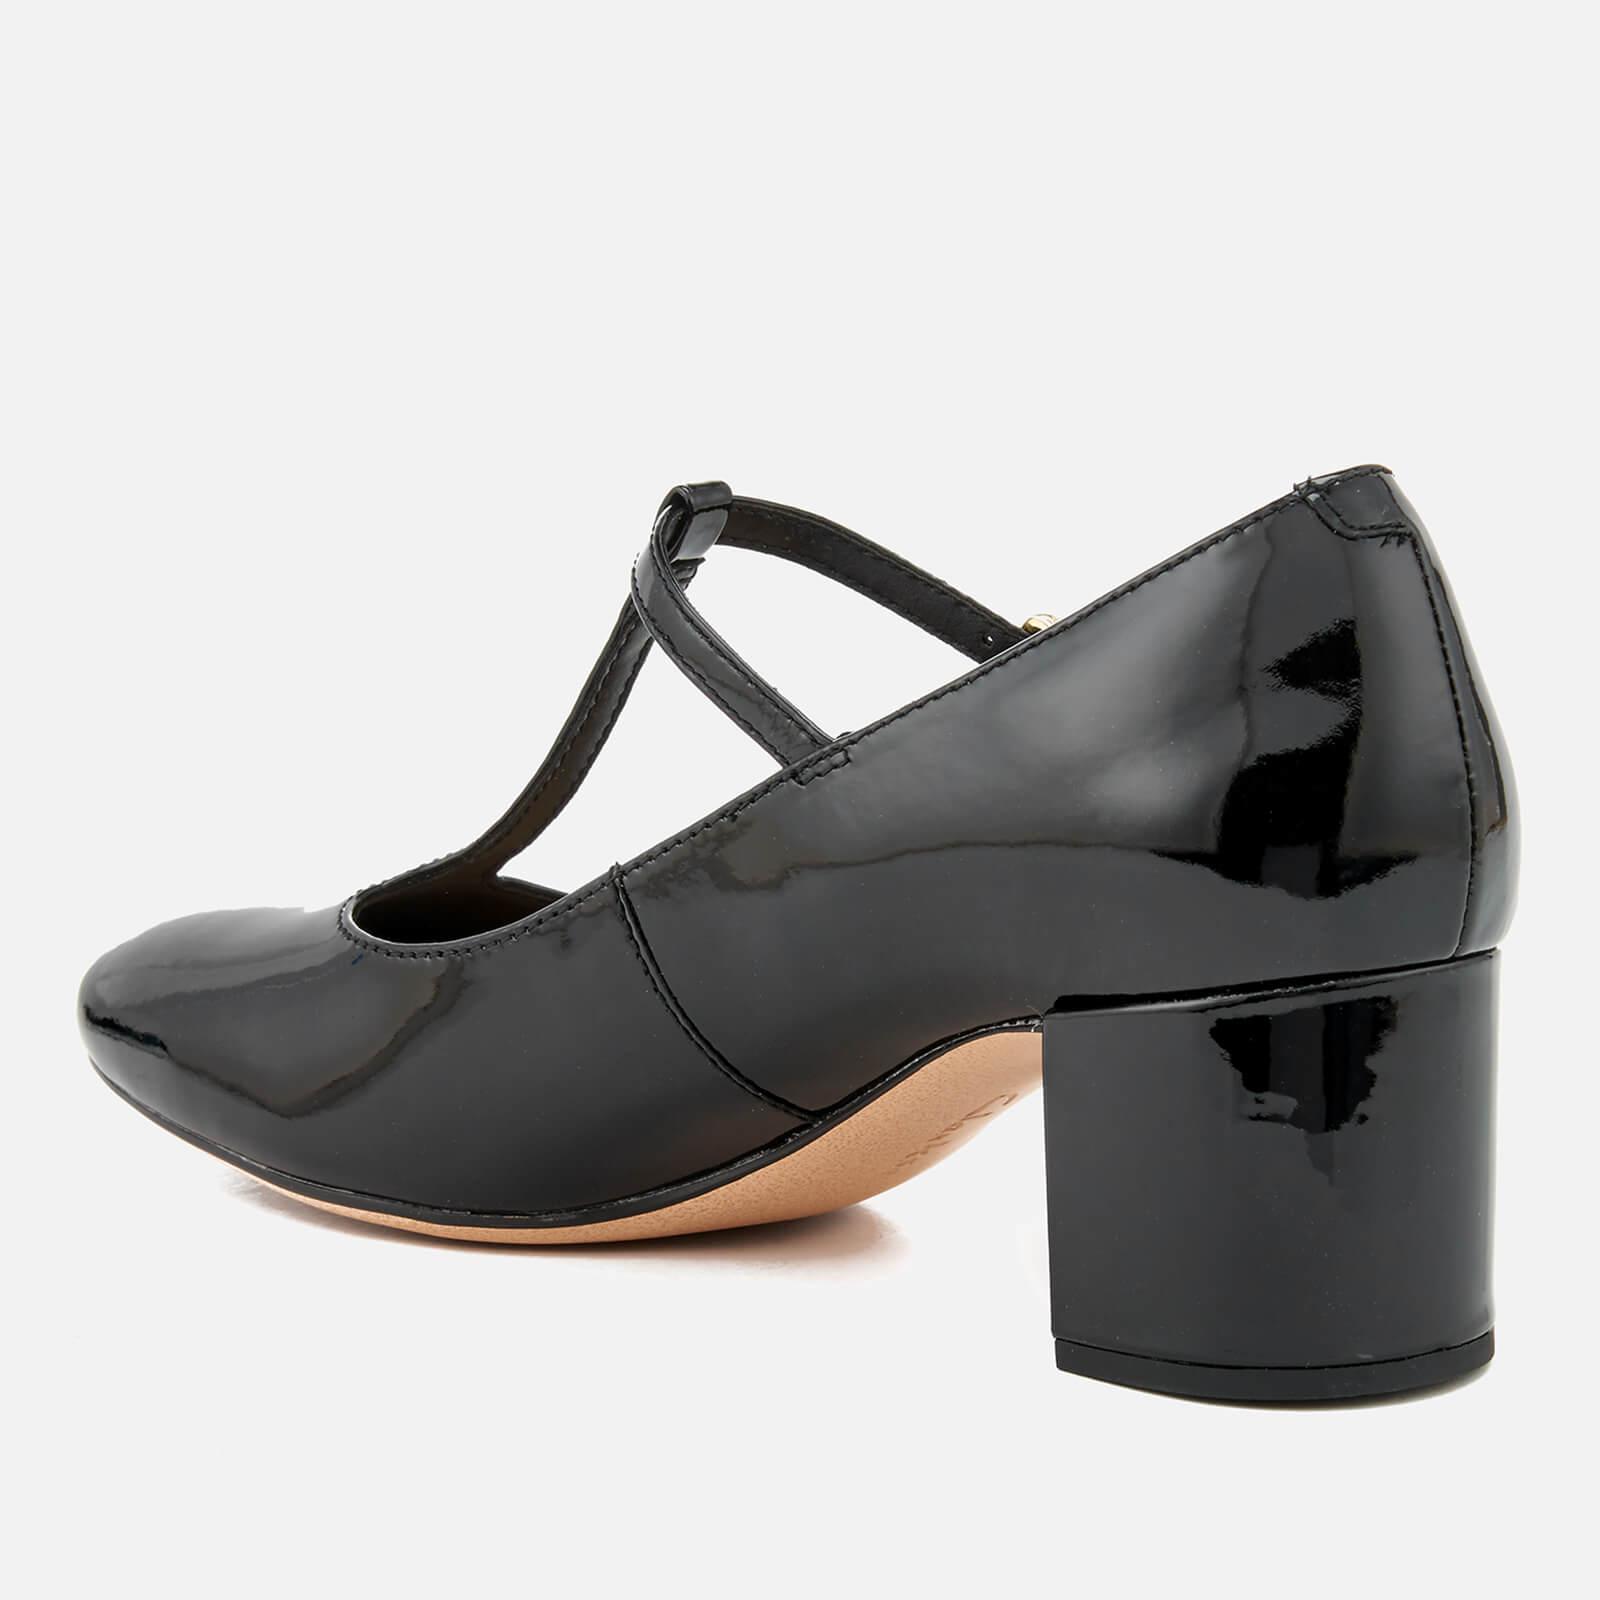 Clarks Leather Orabella Fern Patent T-bar Block Heels in Black | Lyst Canada